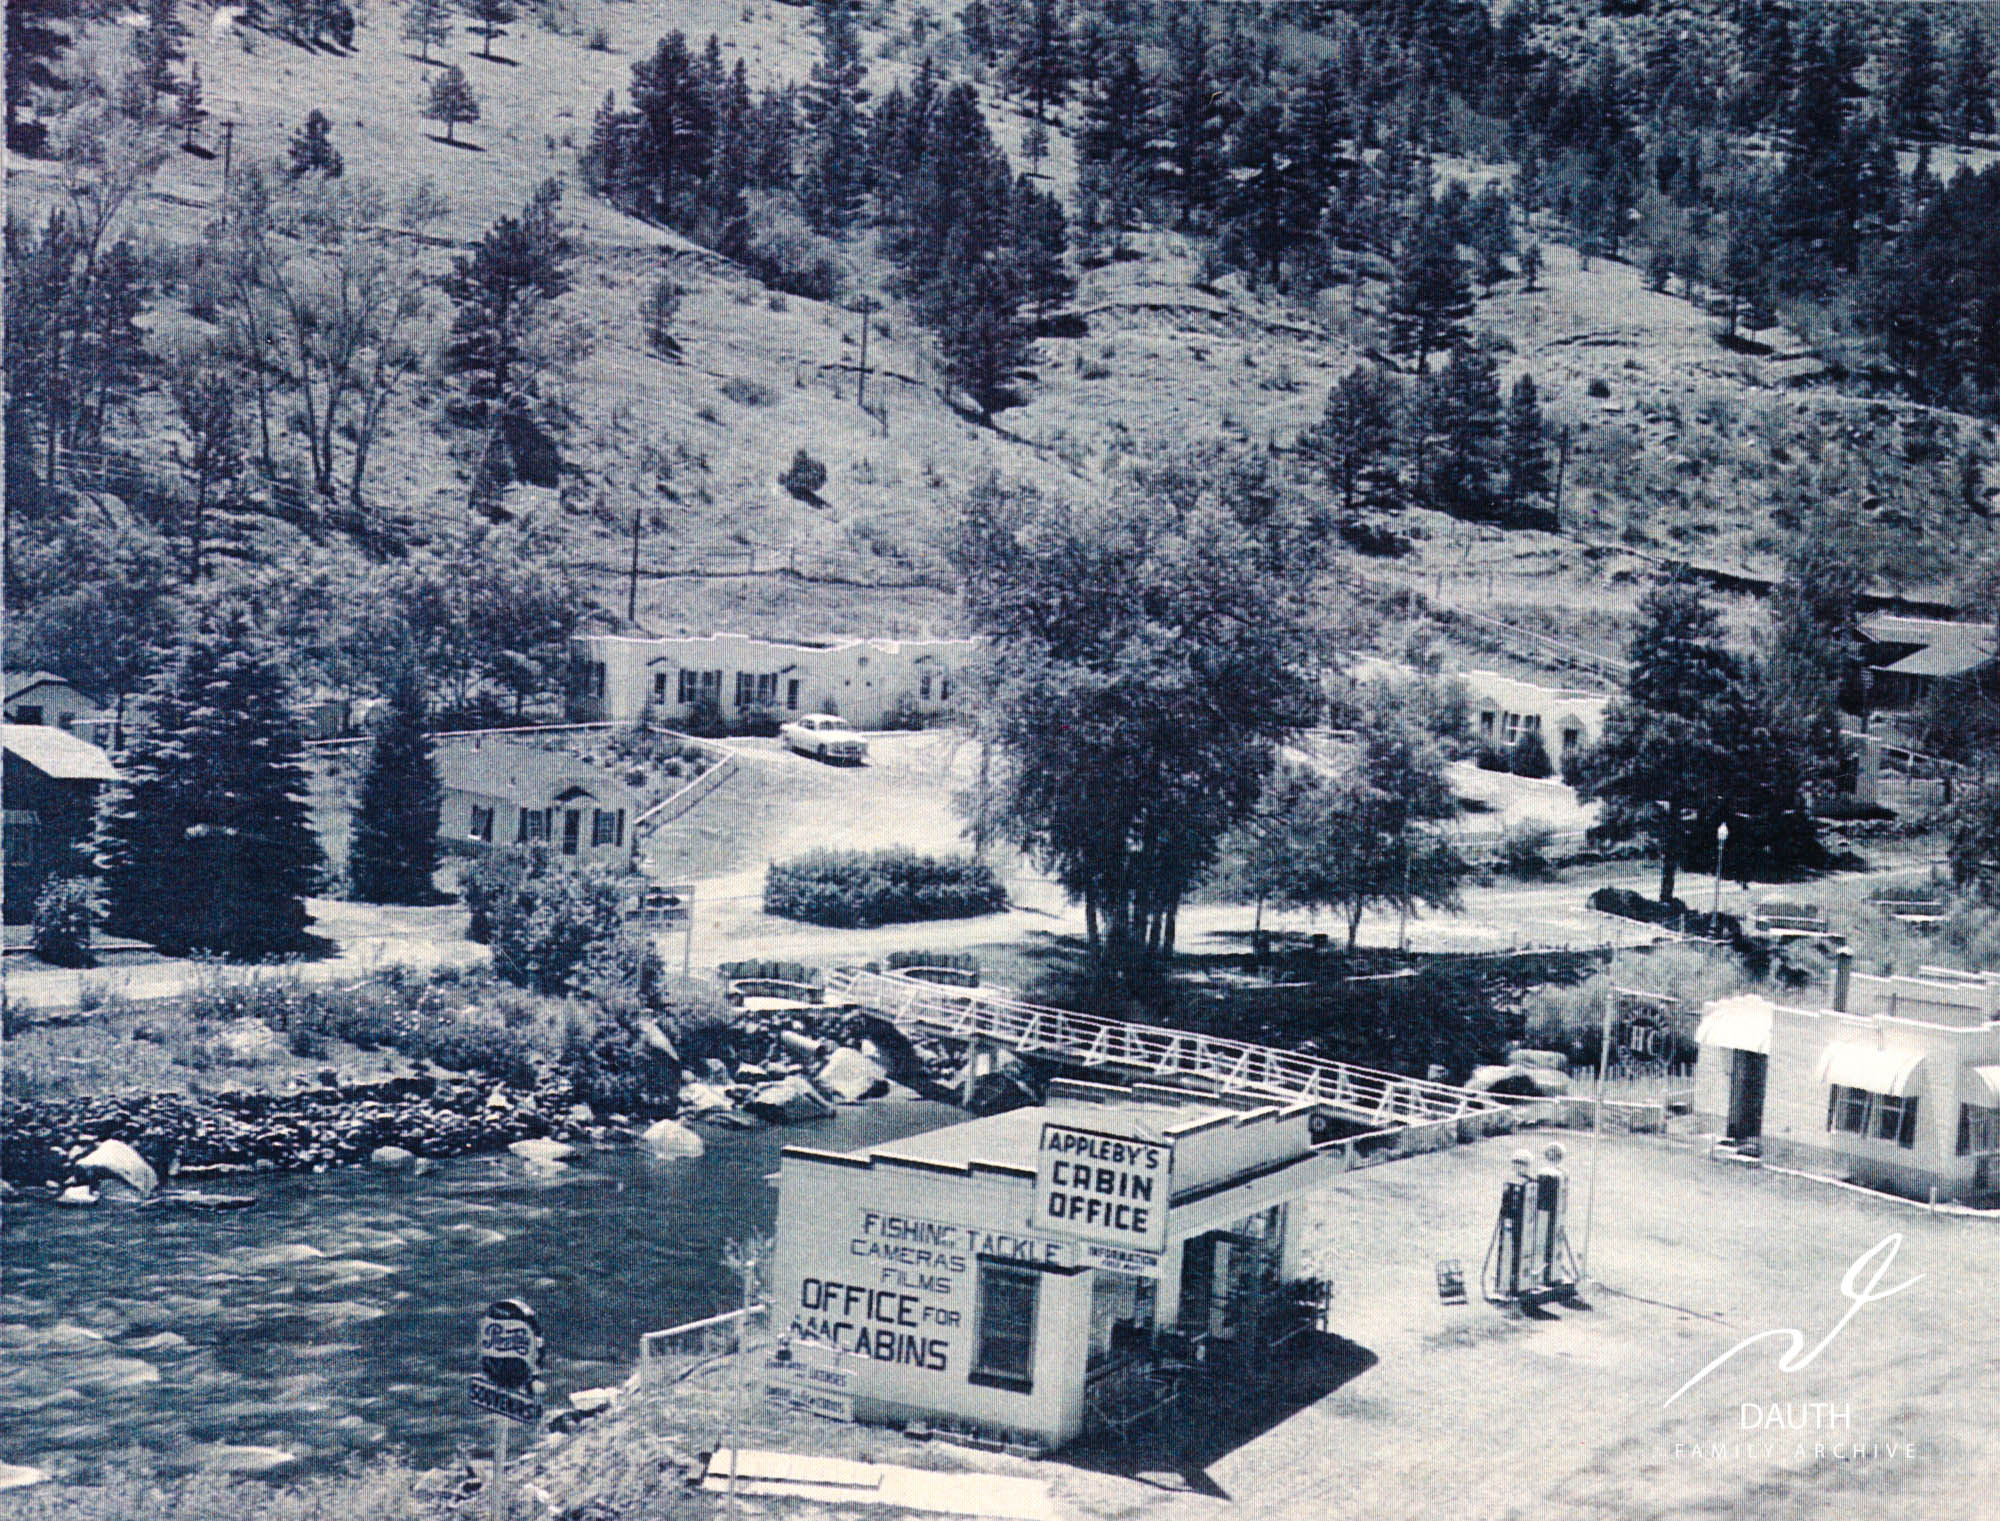 Idlewild Lodge - idlewildlodge.github.io - Circa 1949s - Appleby Motel